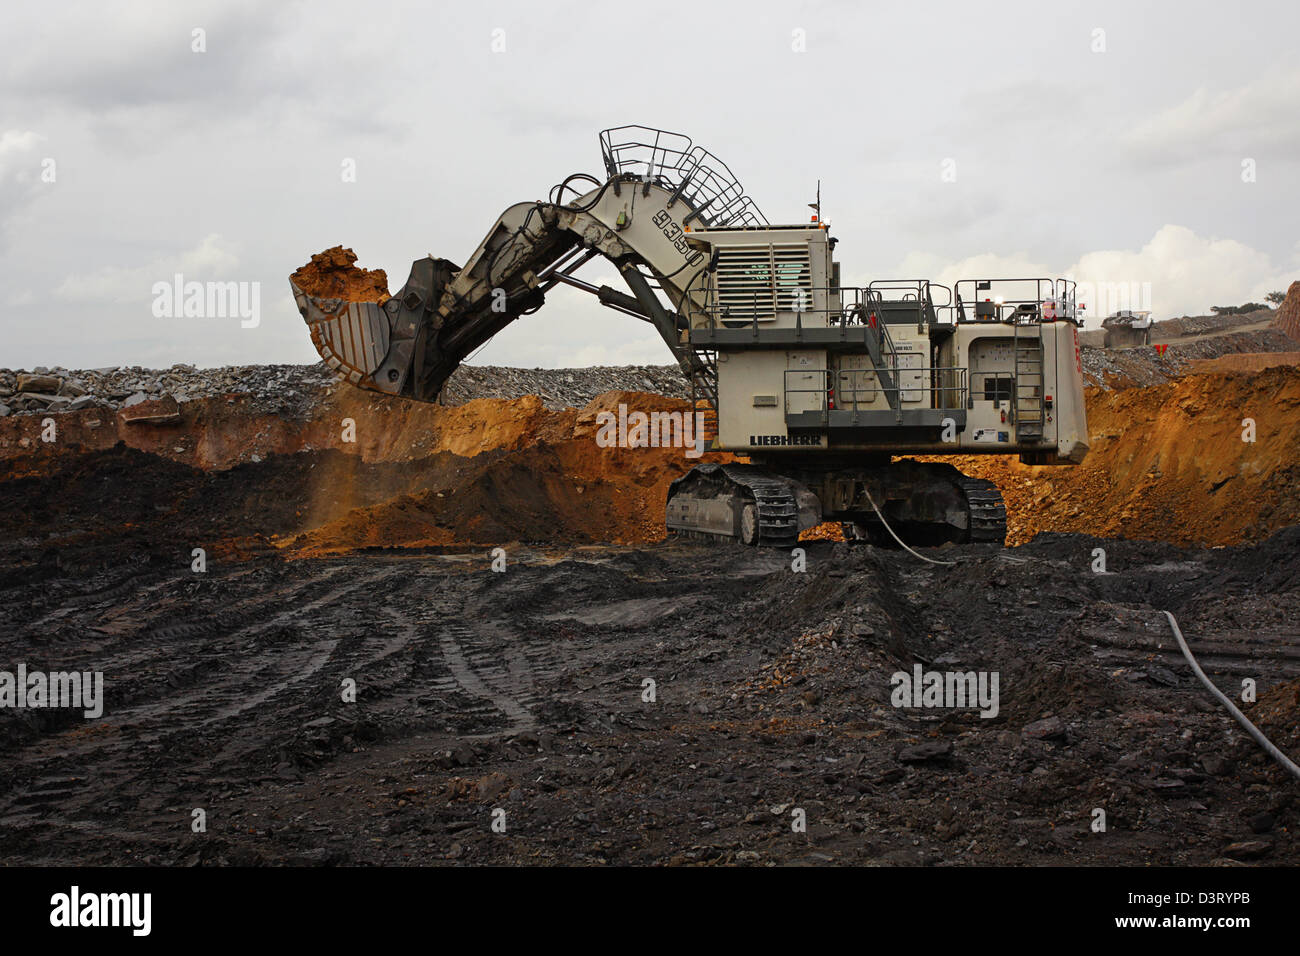 FQM mining excavator and large haul truck, Zambia Stock Photo